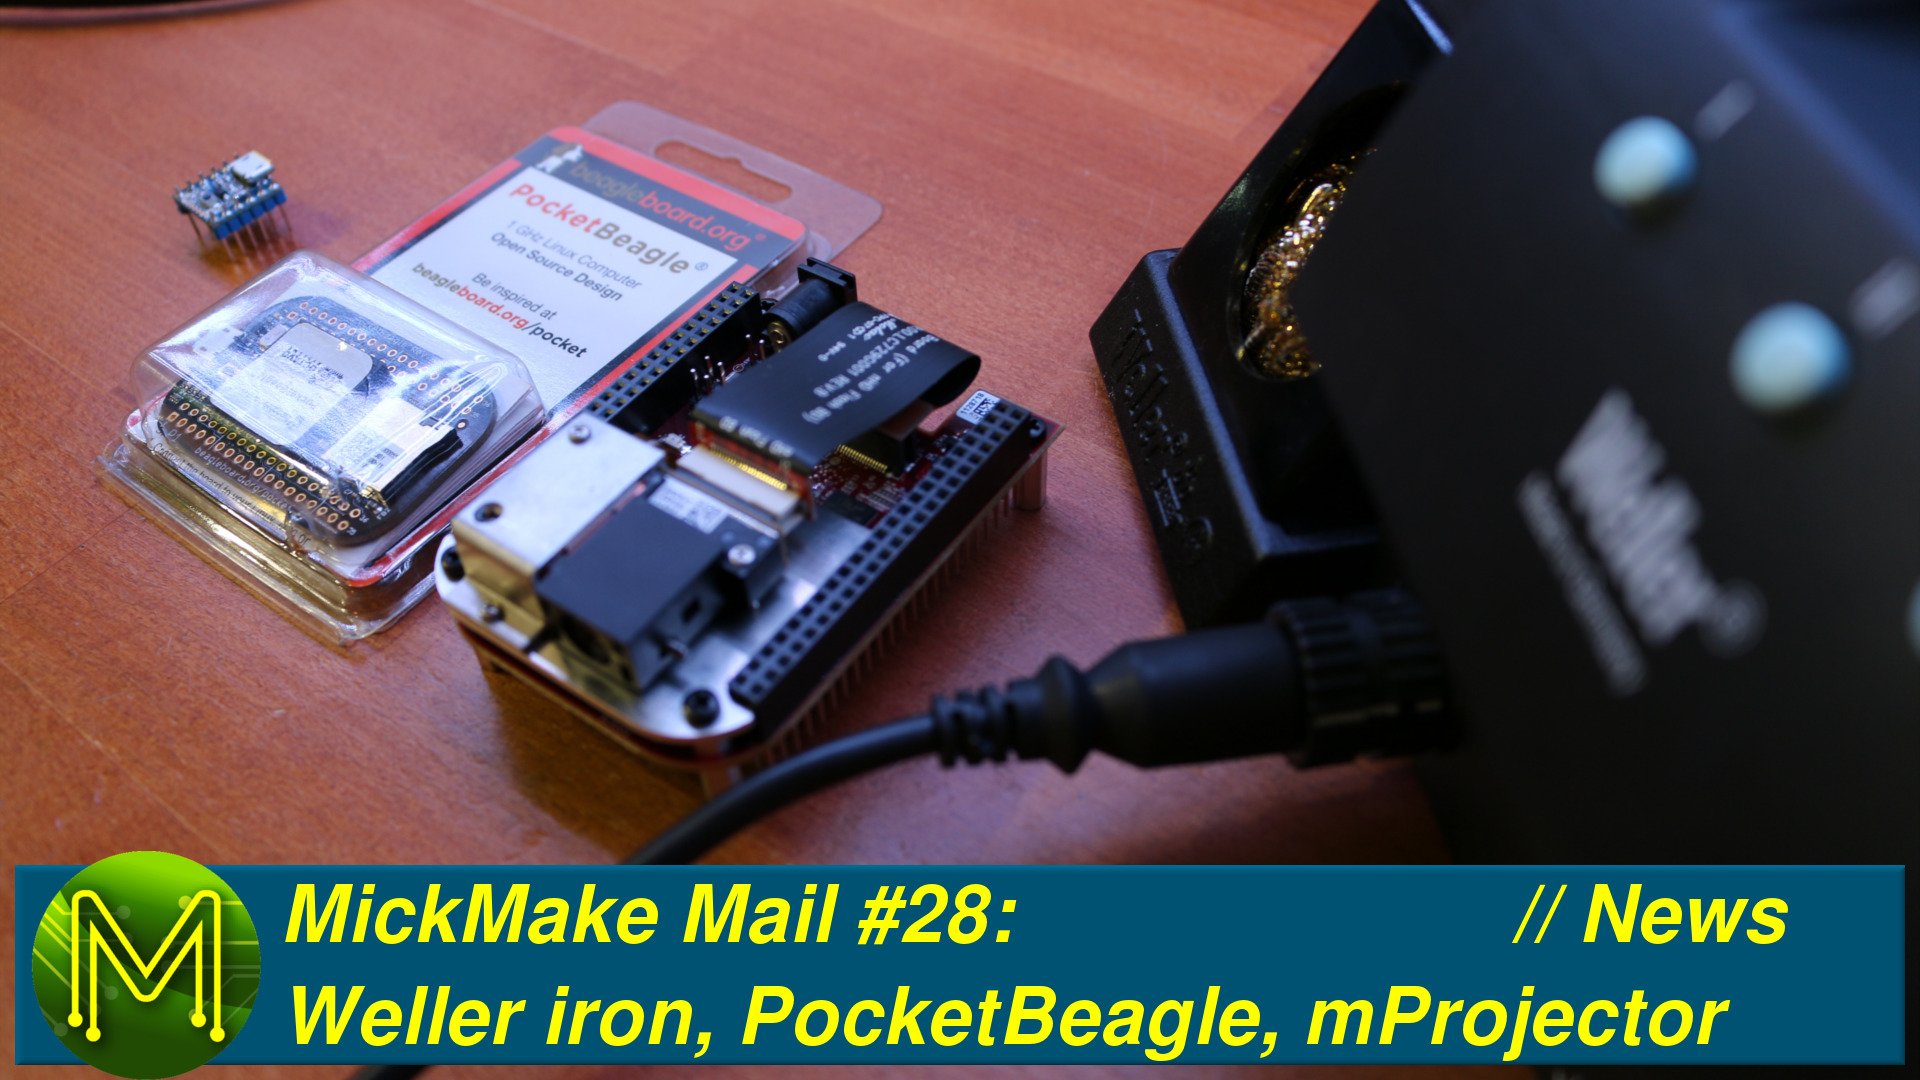 MickMake Mail #28: Weller iron, PocketBeagle and DLP2000 projector // News